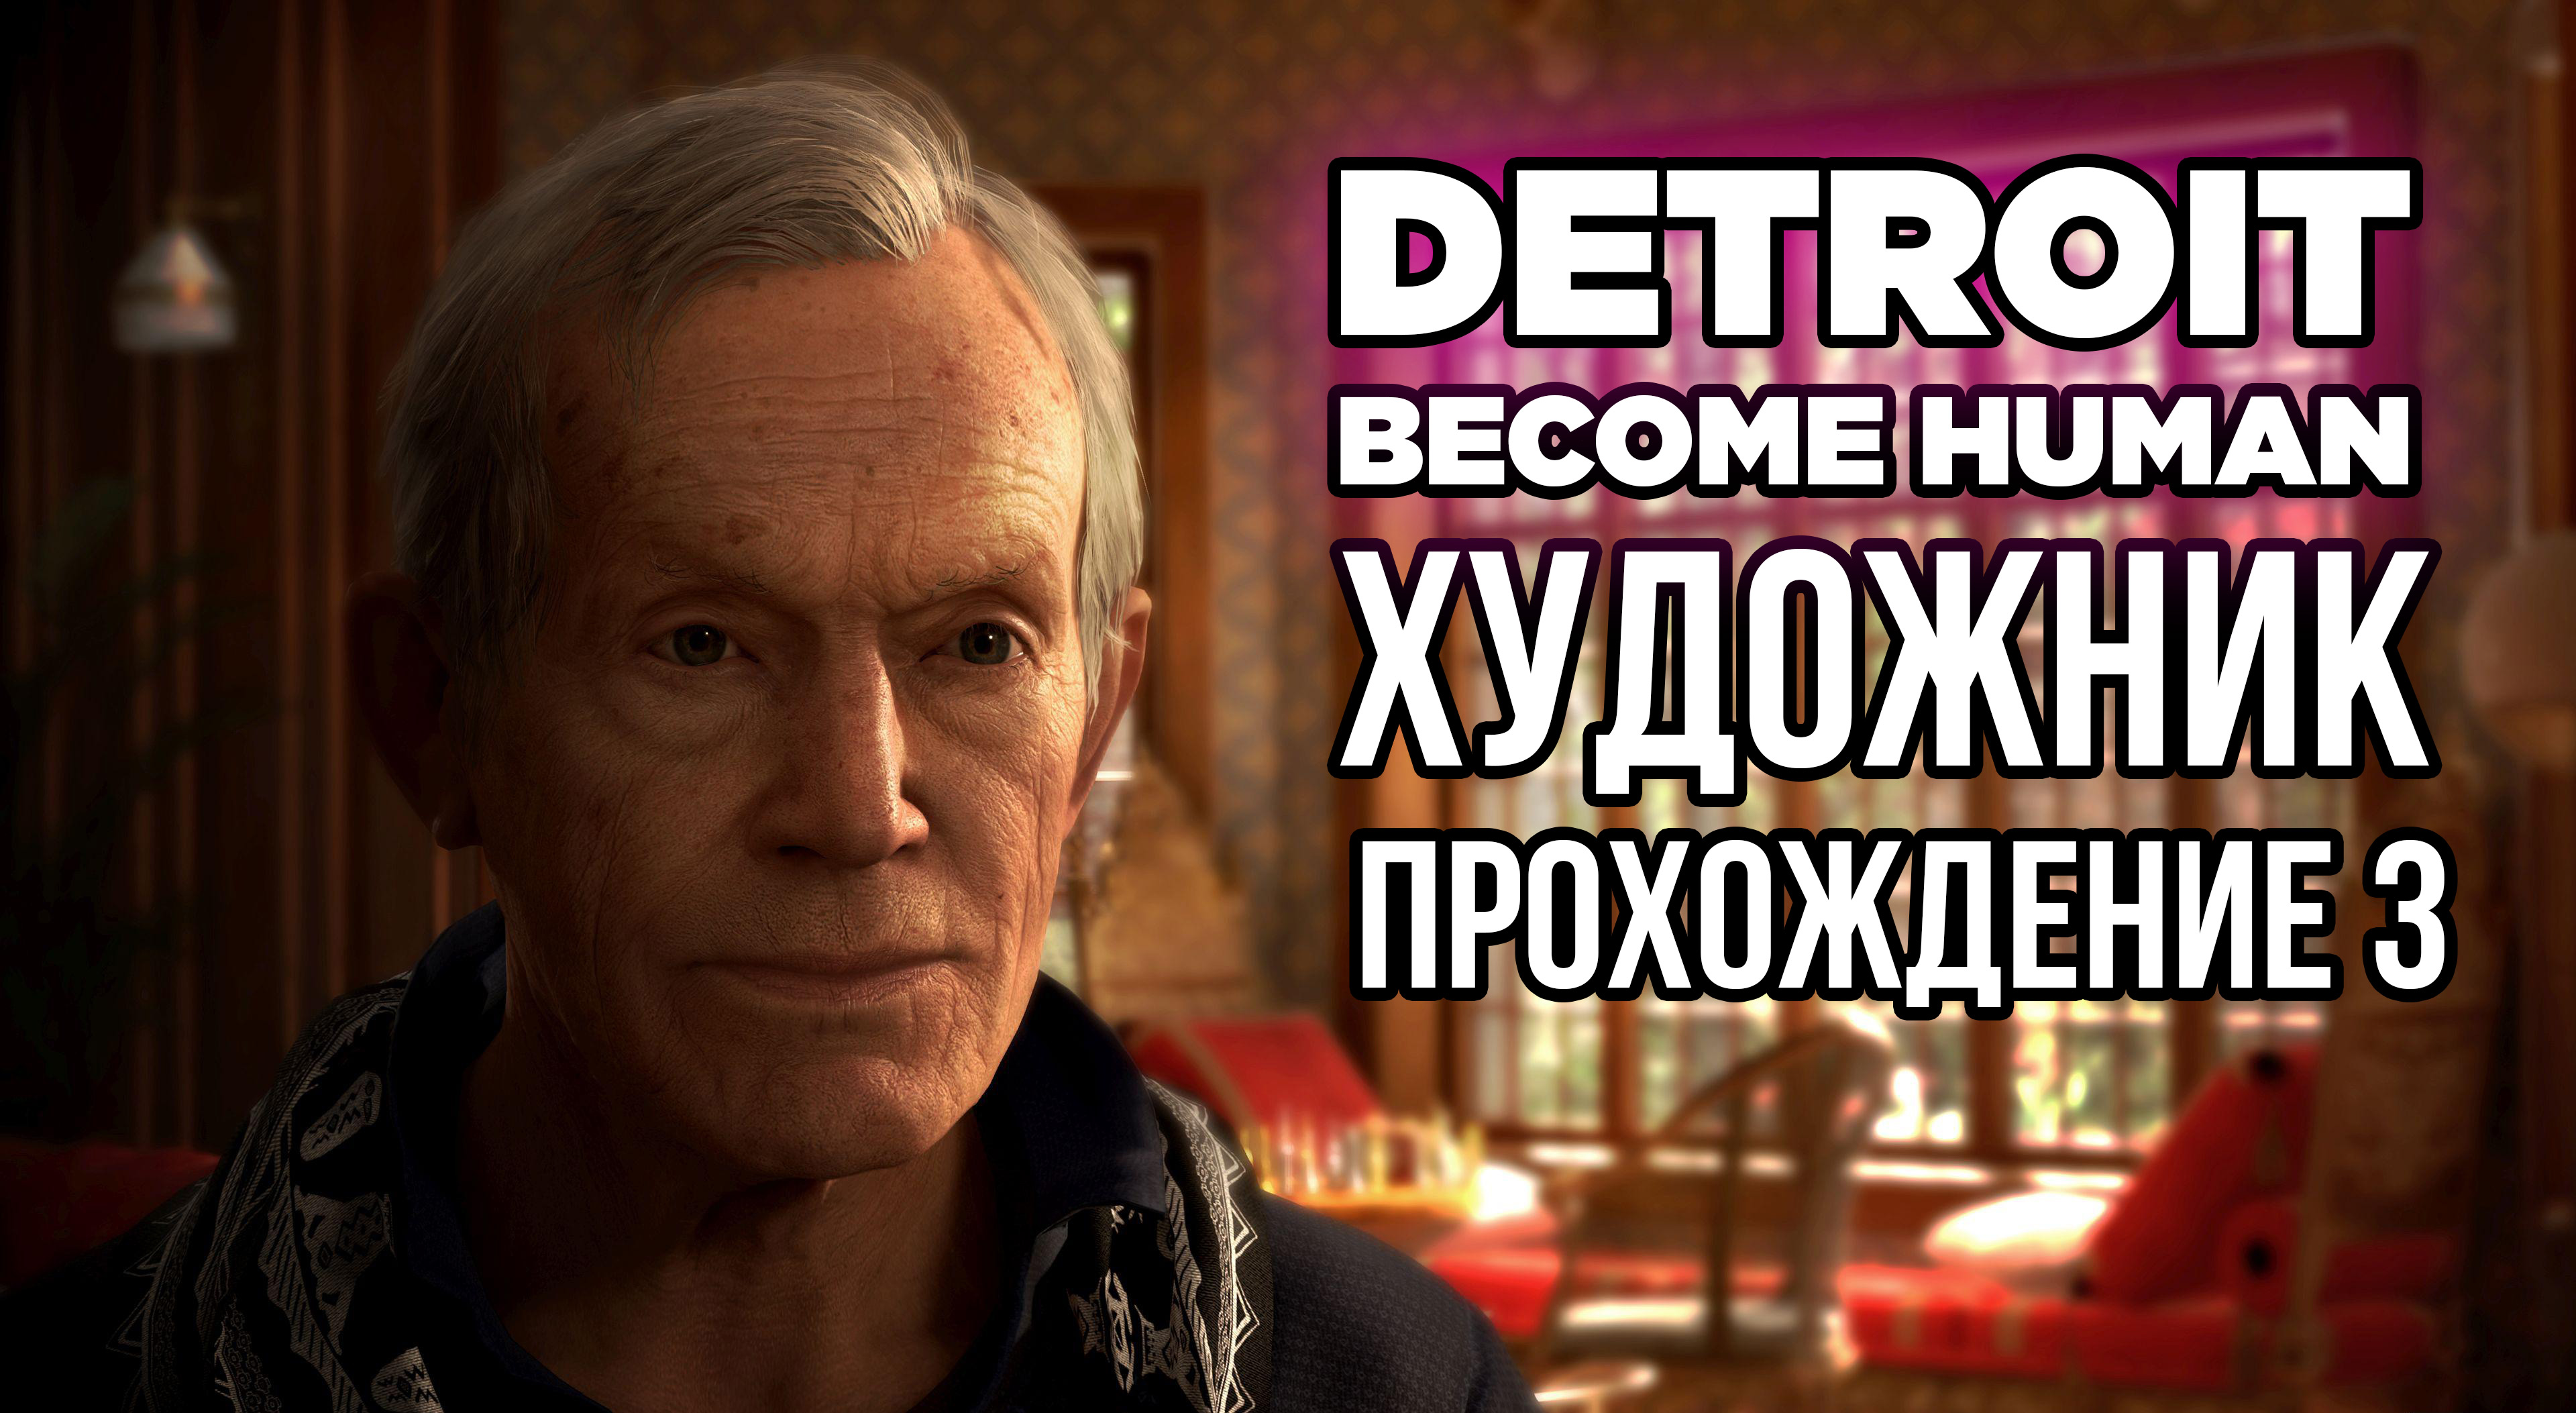 Detroit: Become Human - Художник. Прохождение 3